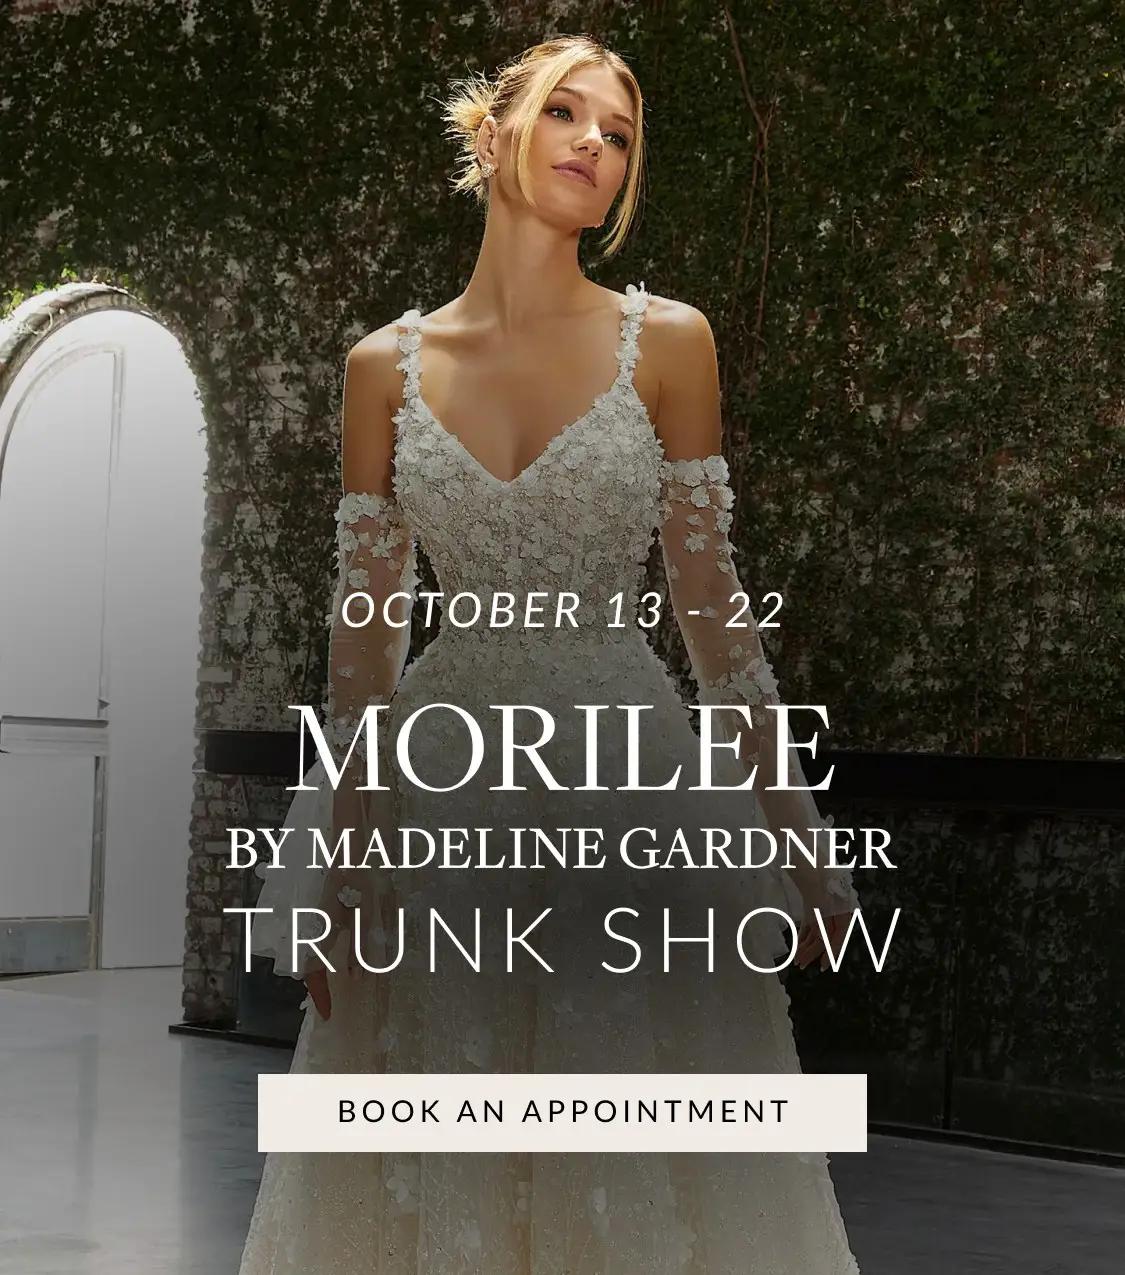 Morilee Trunk Show October banner for mobile